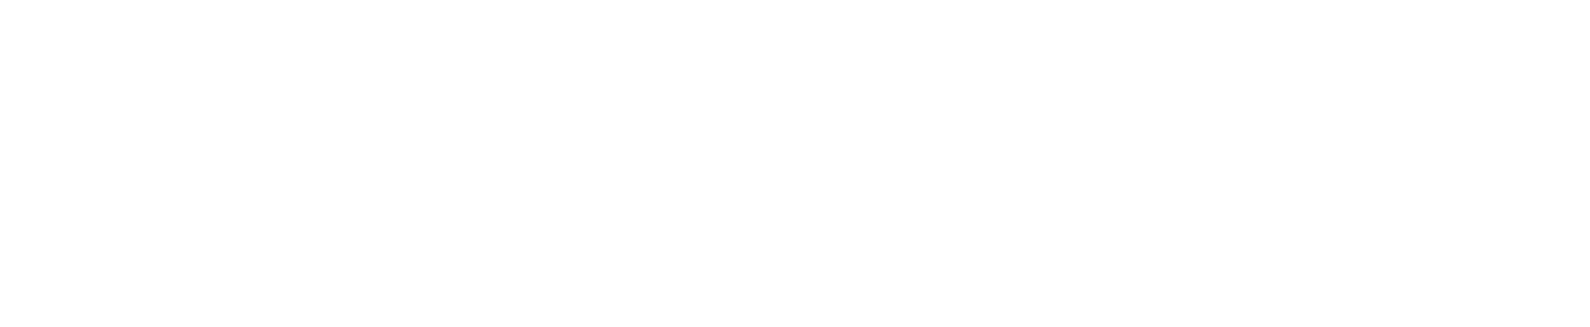 Pinnbrook Horizontal Logo White